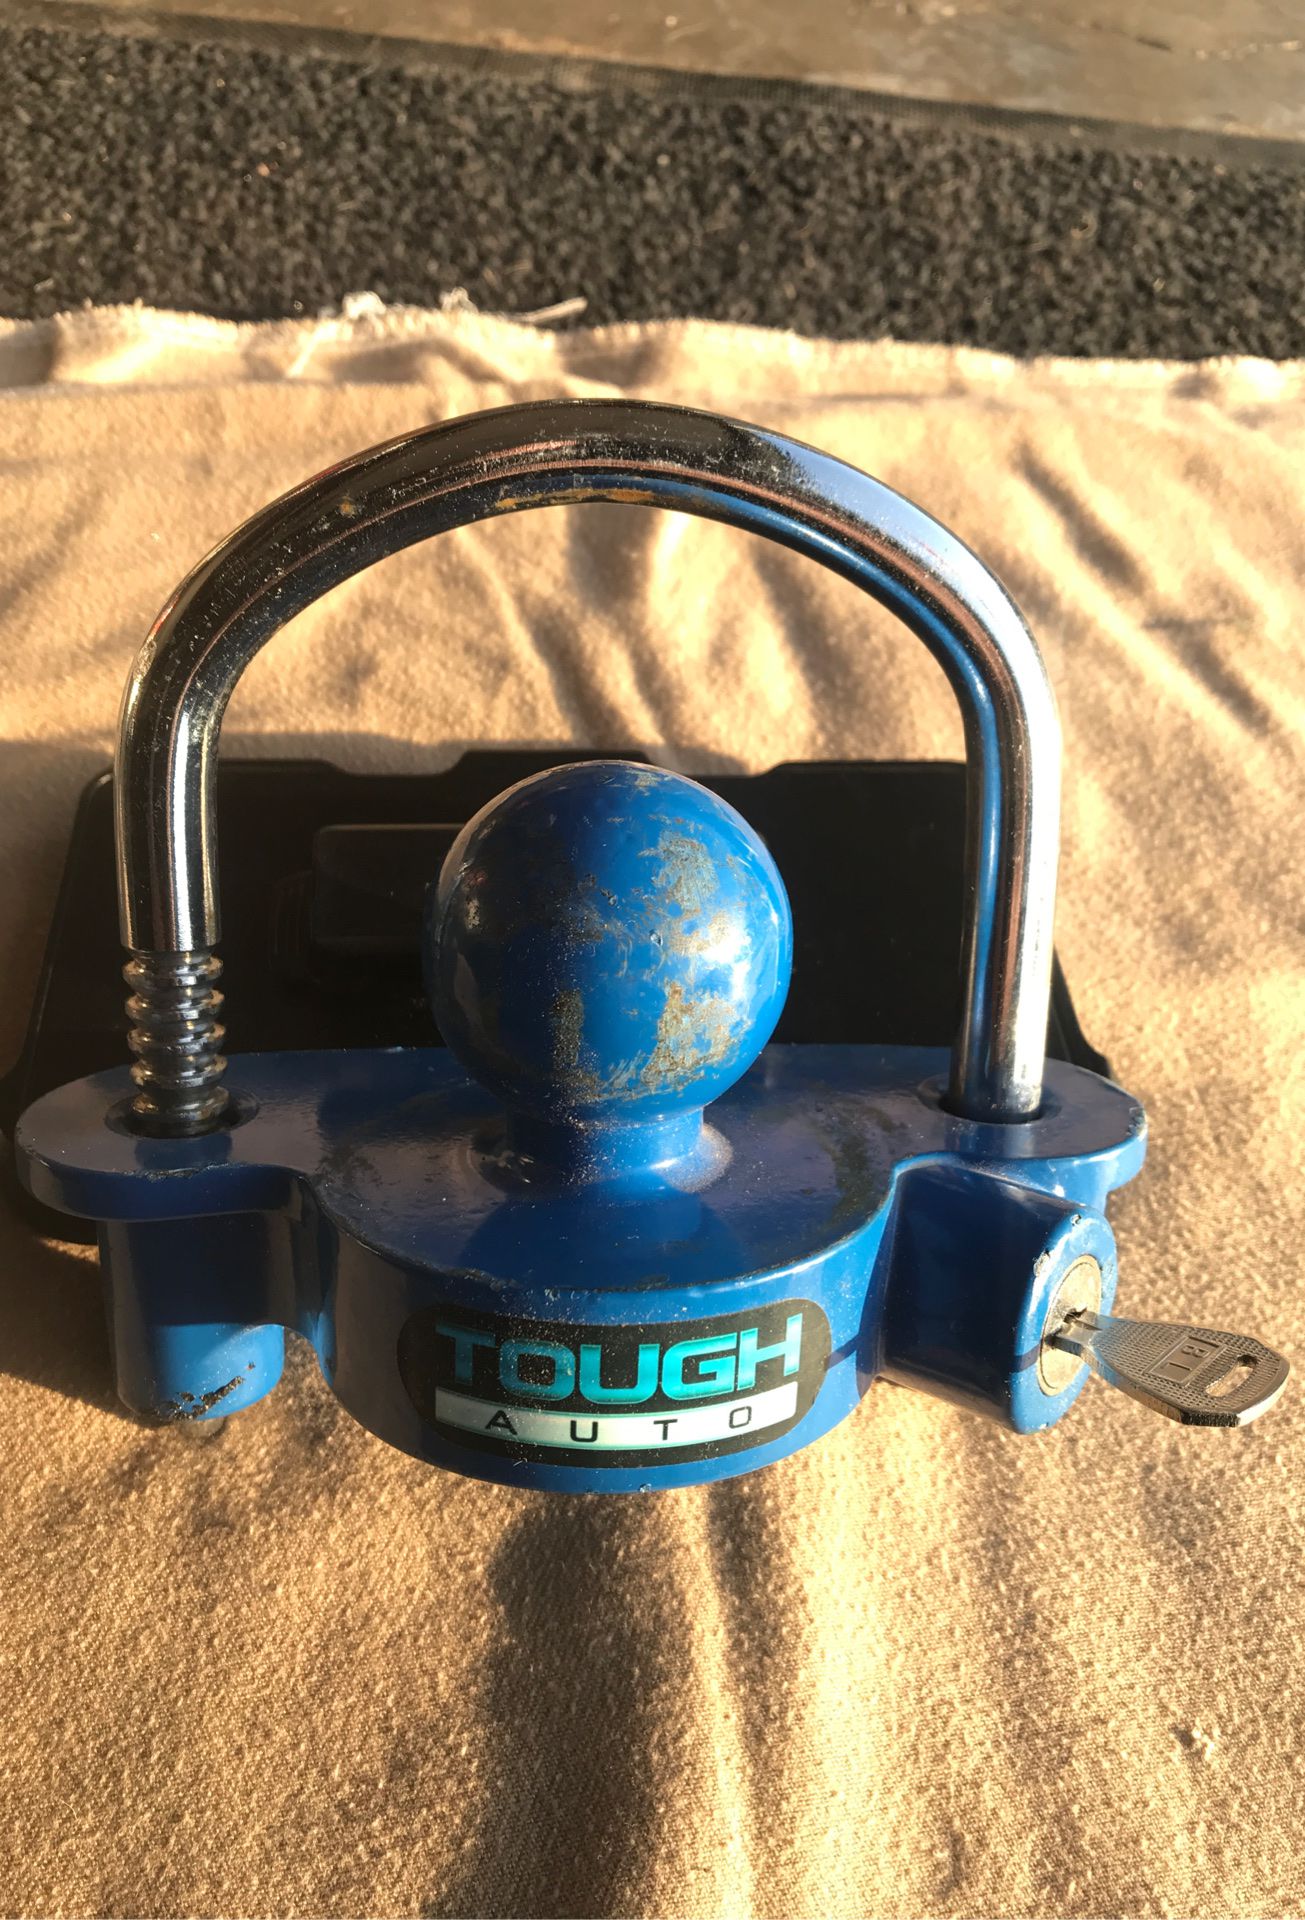 Trailer lock